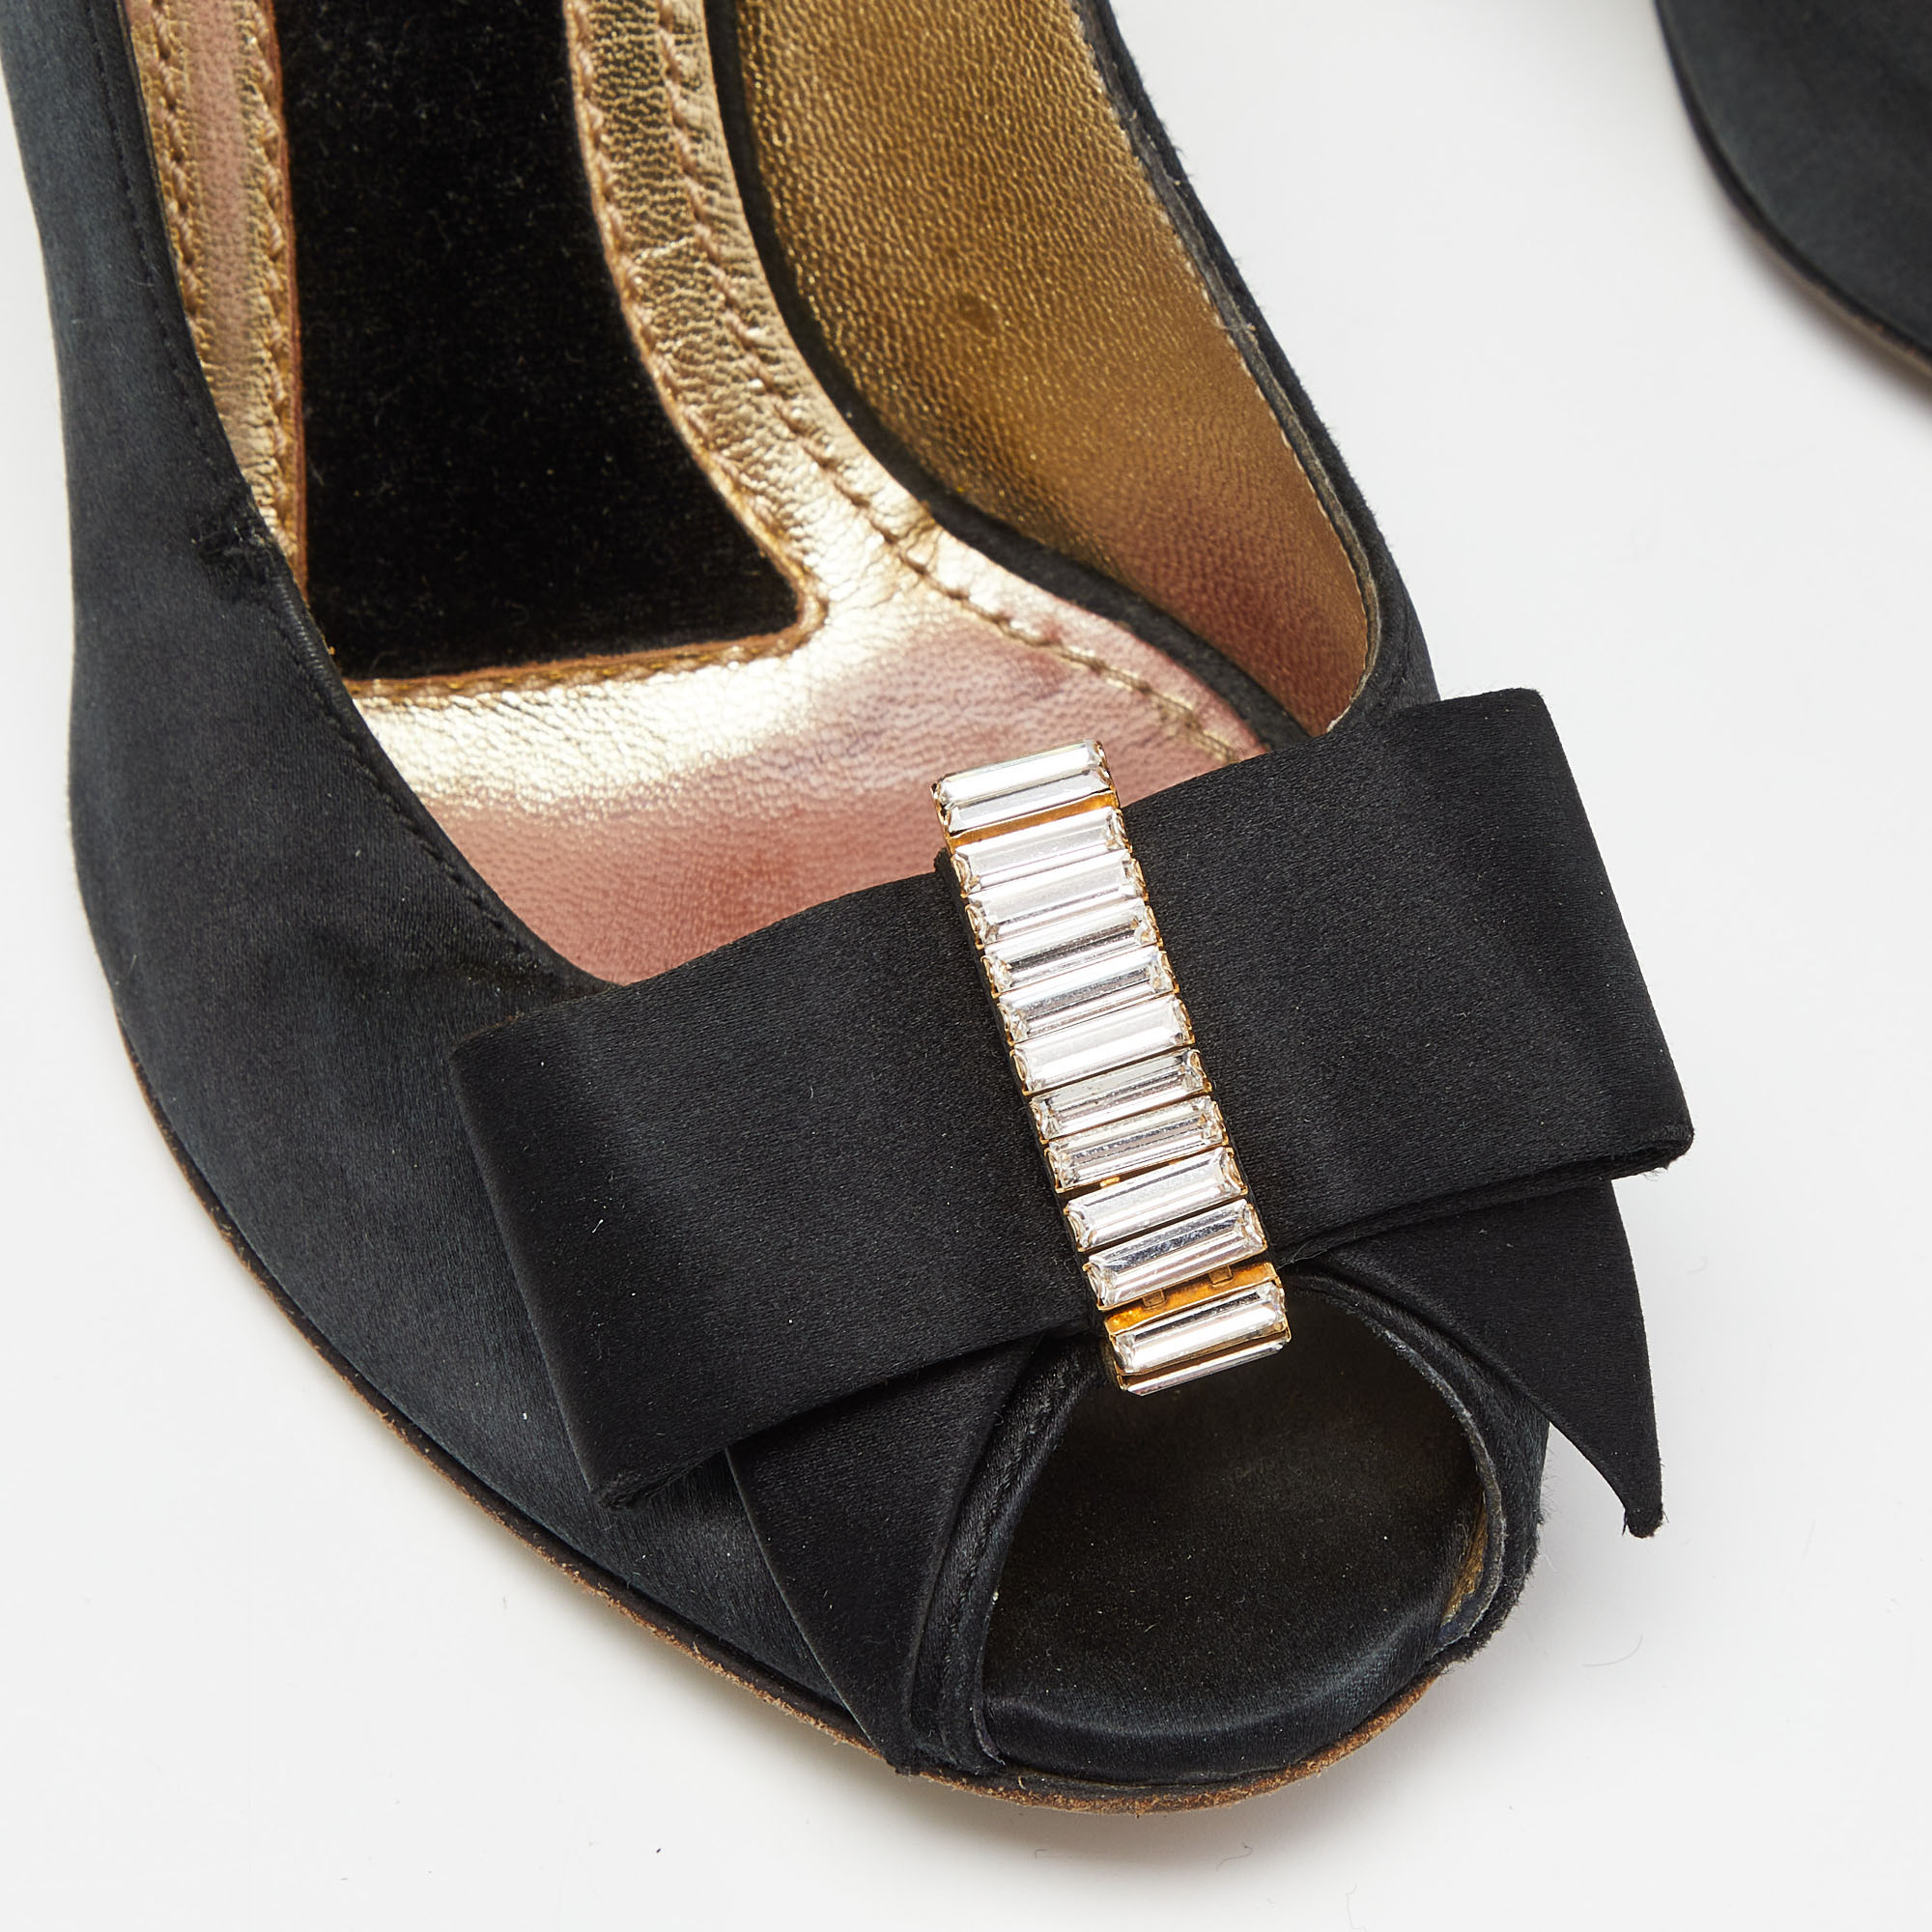 Dolce & Gabbana Black Satin Crystal Embellished Peep Toe Pumps Size 37.5